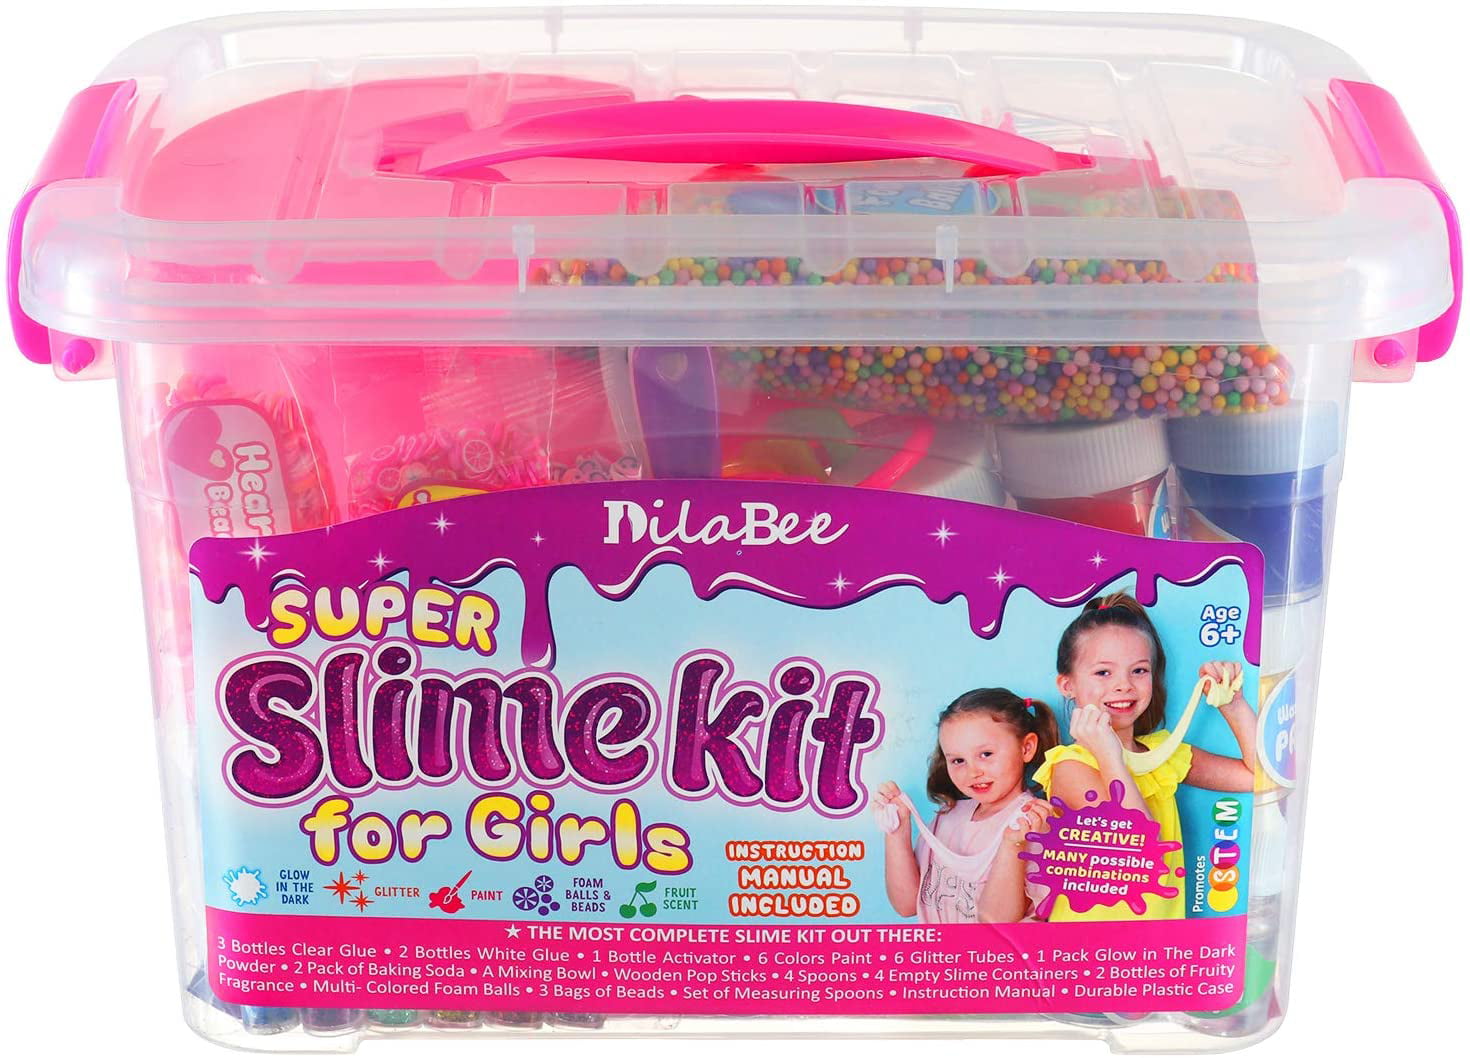 Jumbo Slime Maker Supplies Kit for Kids. Safe Non Toxic Toys Glow in Dark  NEW